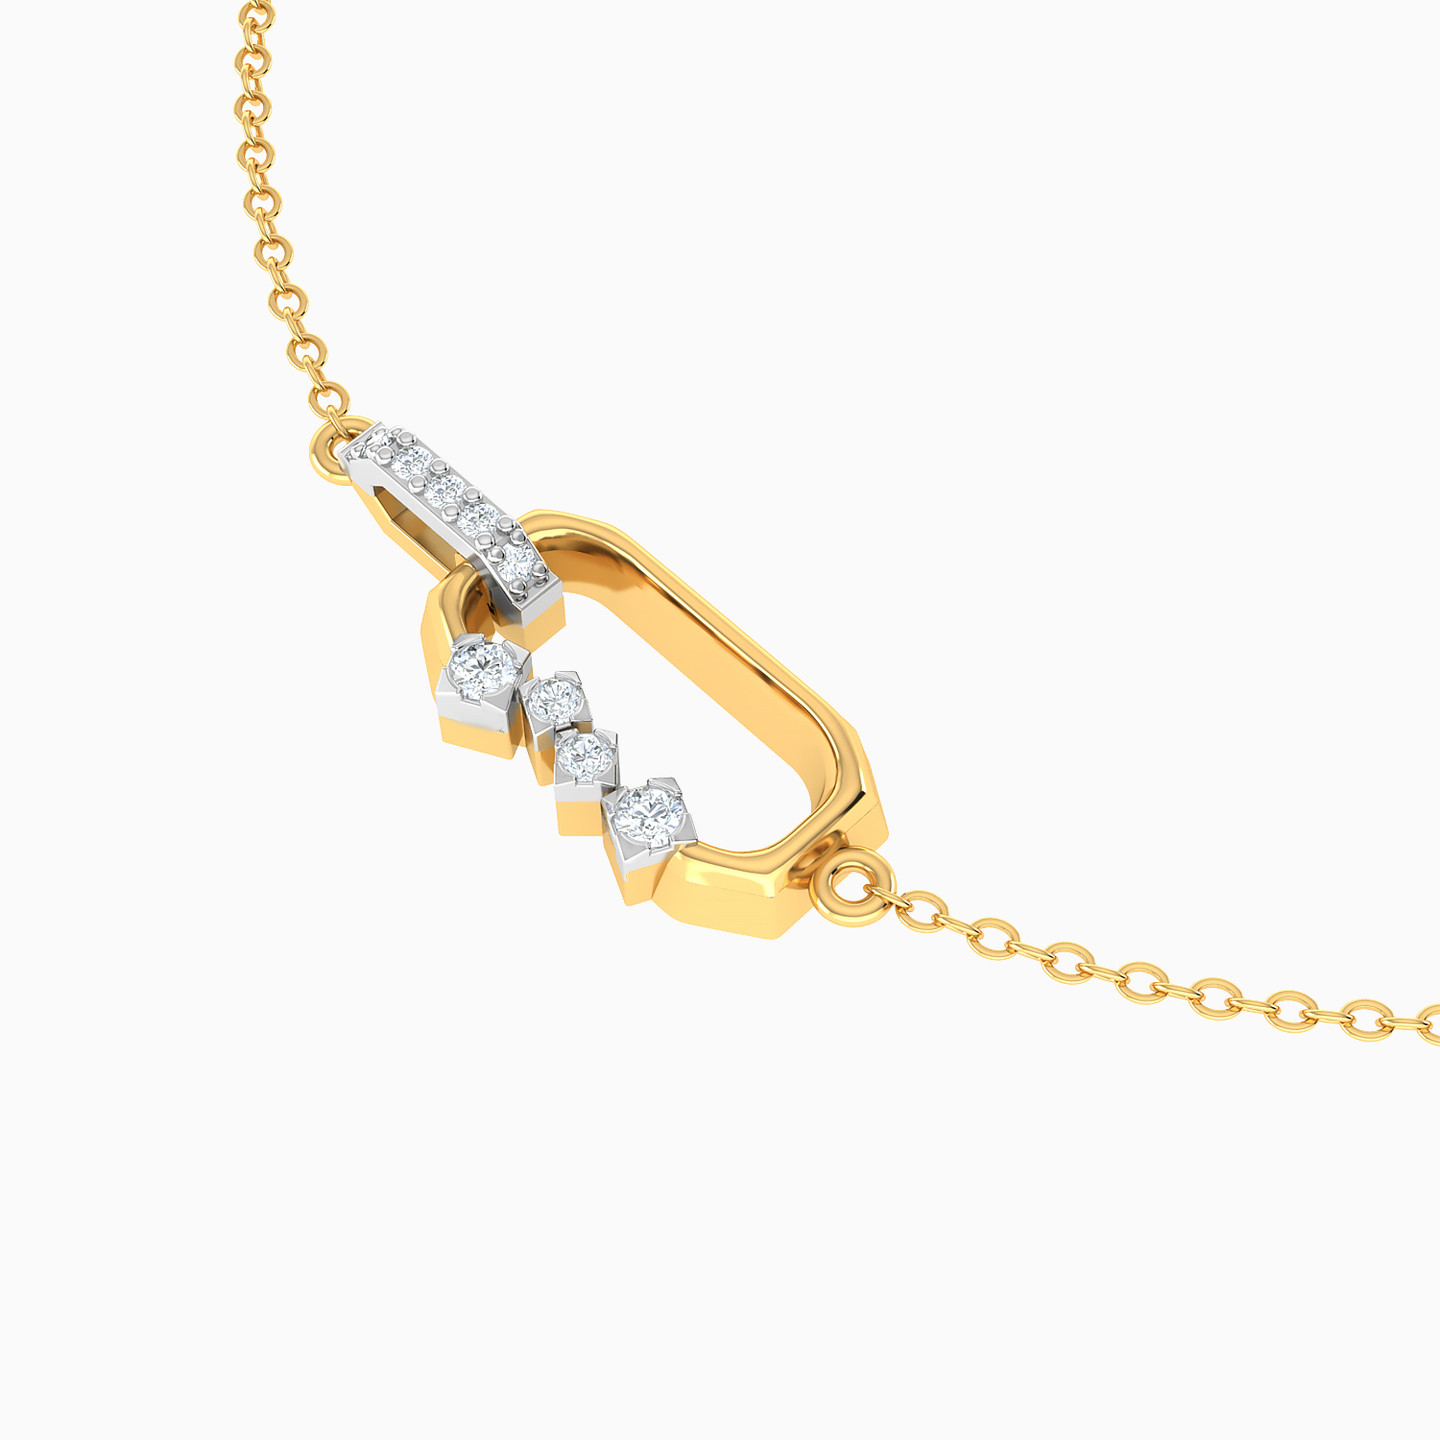 Rectangle Shaped Diamond Chain Bracelet in 18K Gold - 3